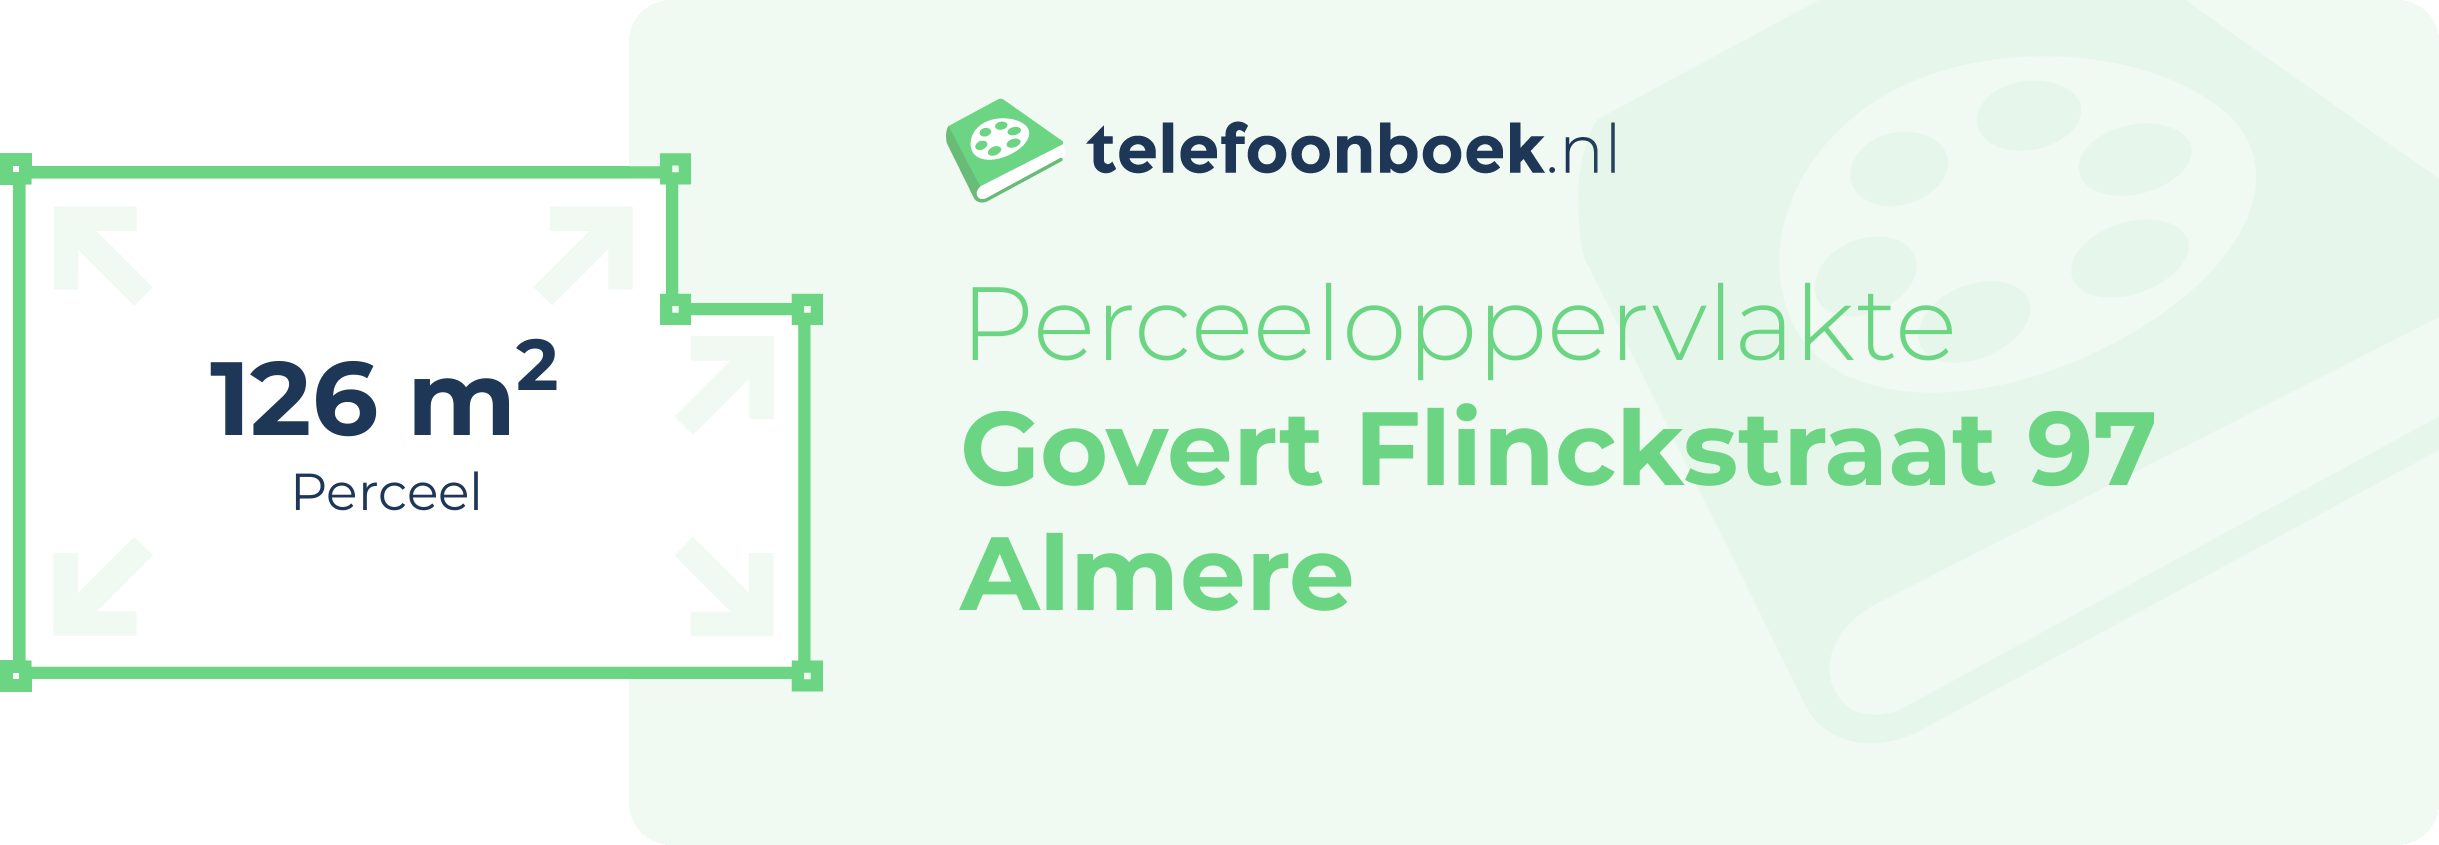 Perceeloppervlakte Govert Flinckstraat 97 Almere